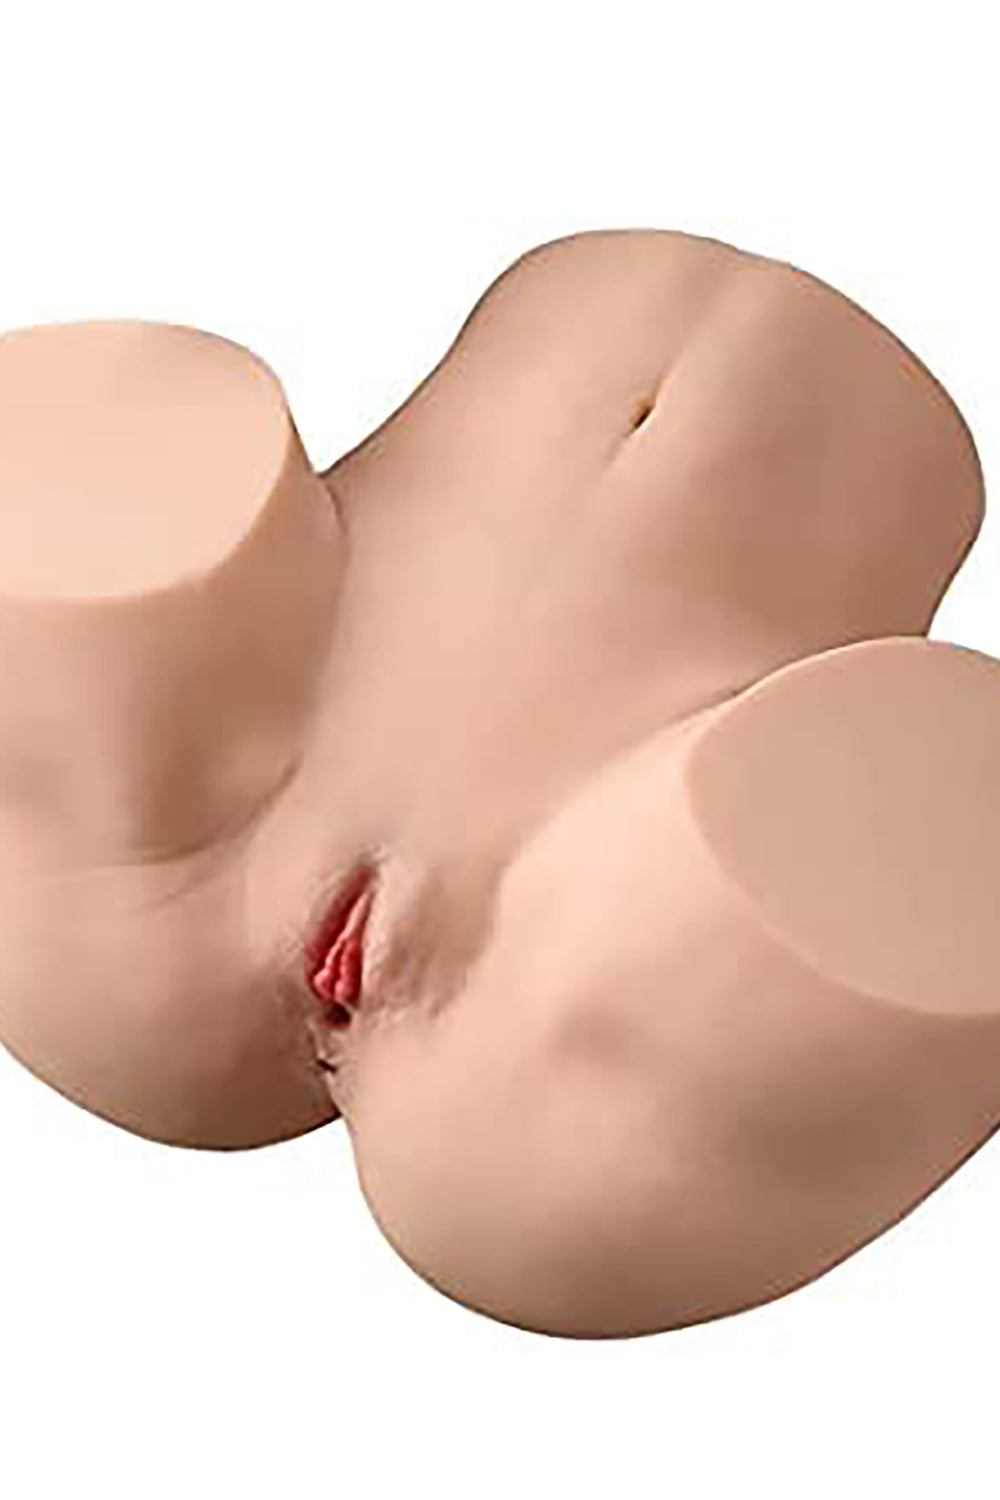 EU Stock - TPE 23.15 lbs/10.5kg Nature Skin Half Body Fat Ass Sex Doll Torso